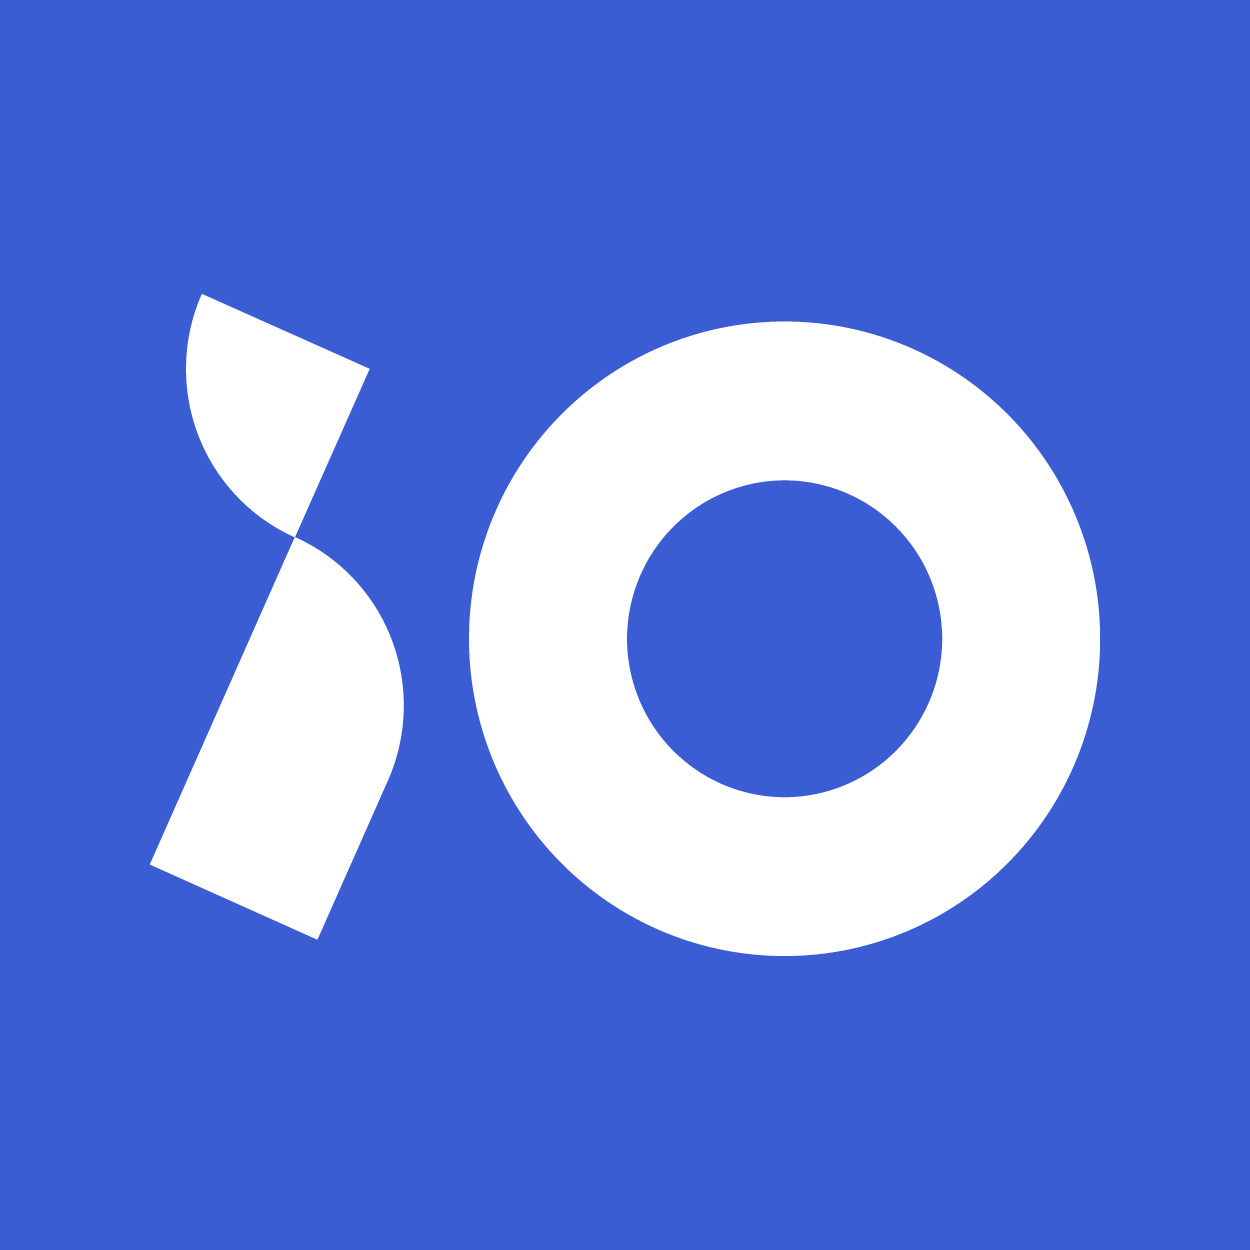 iO logo color blue